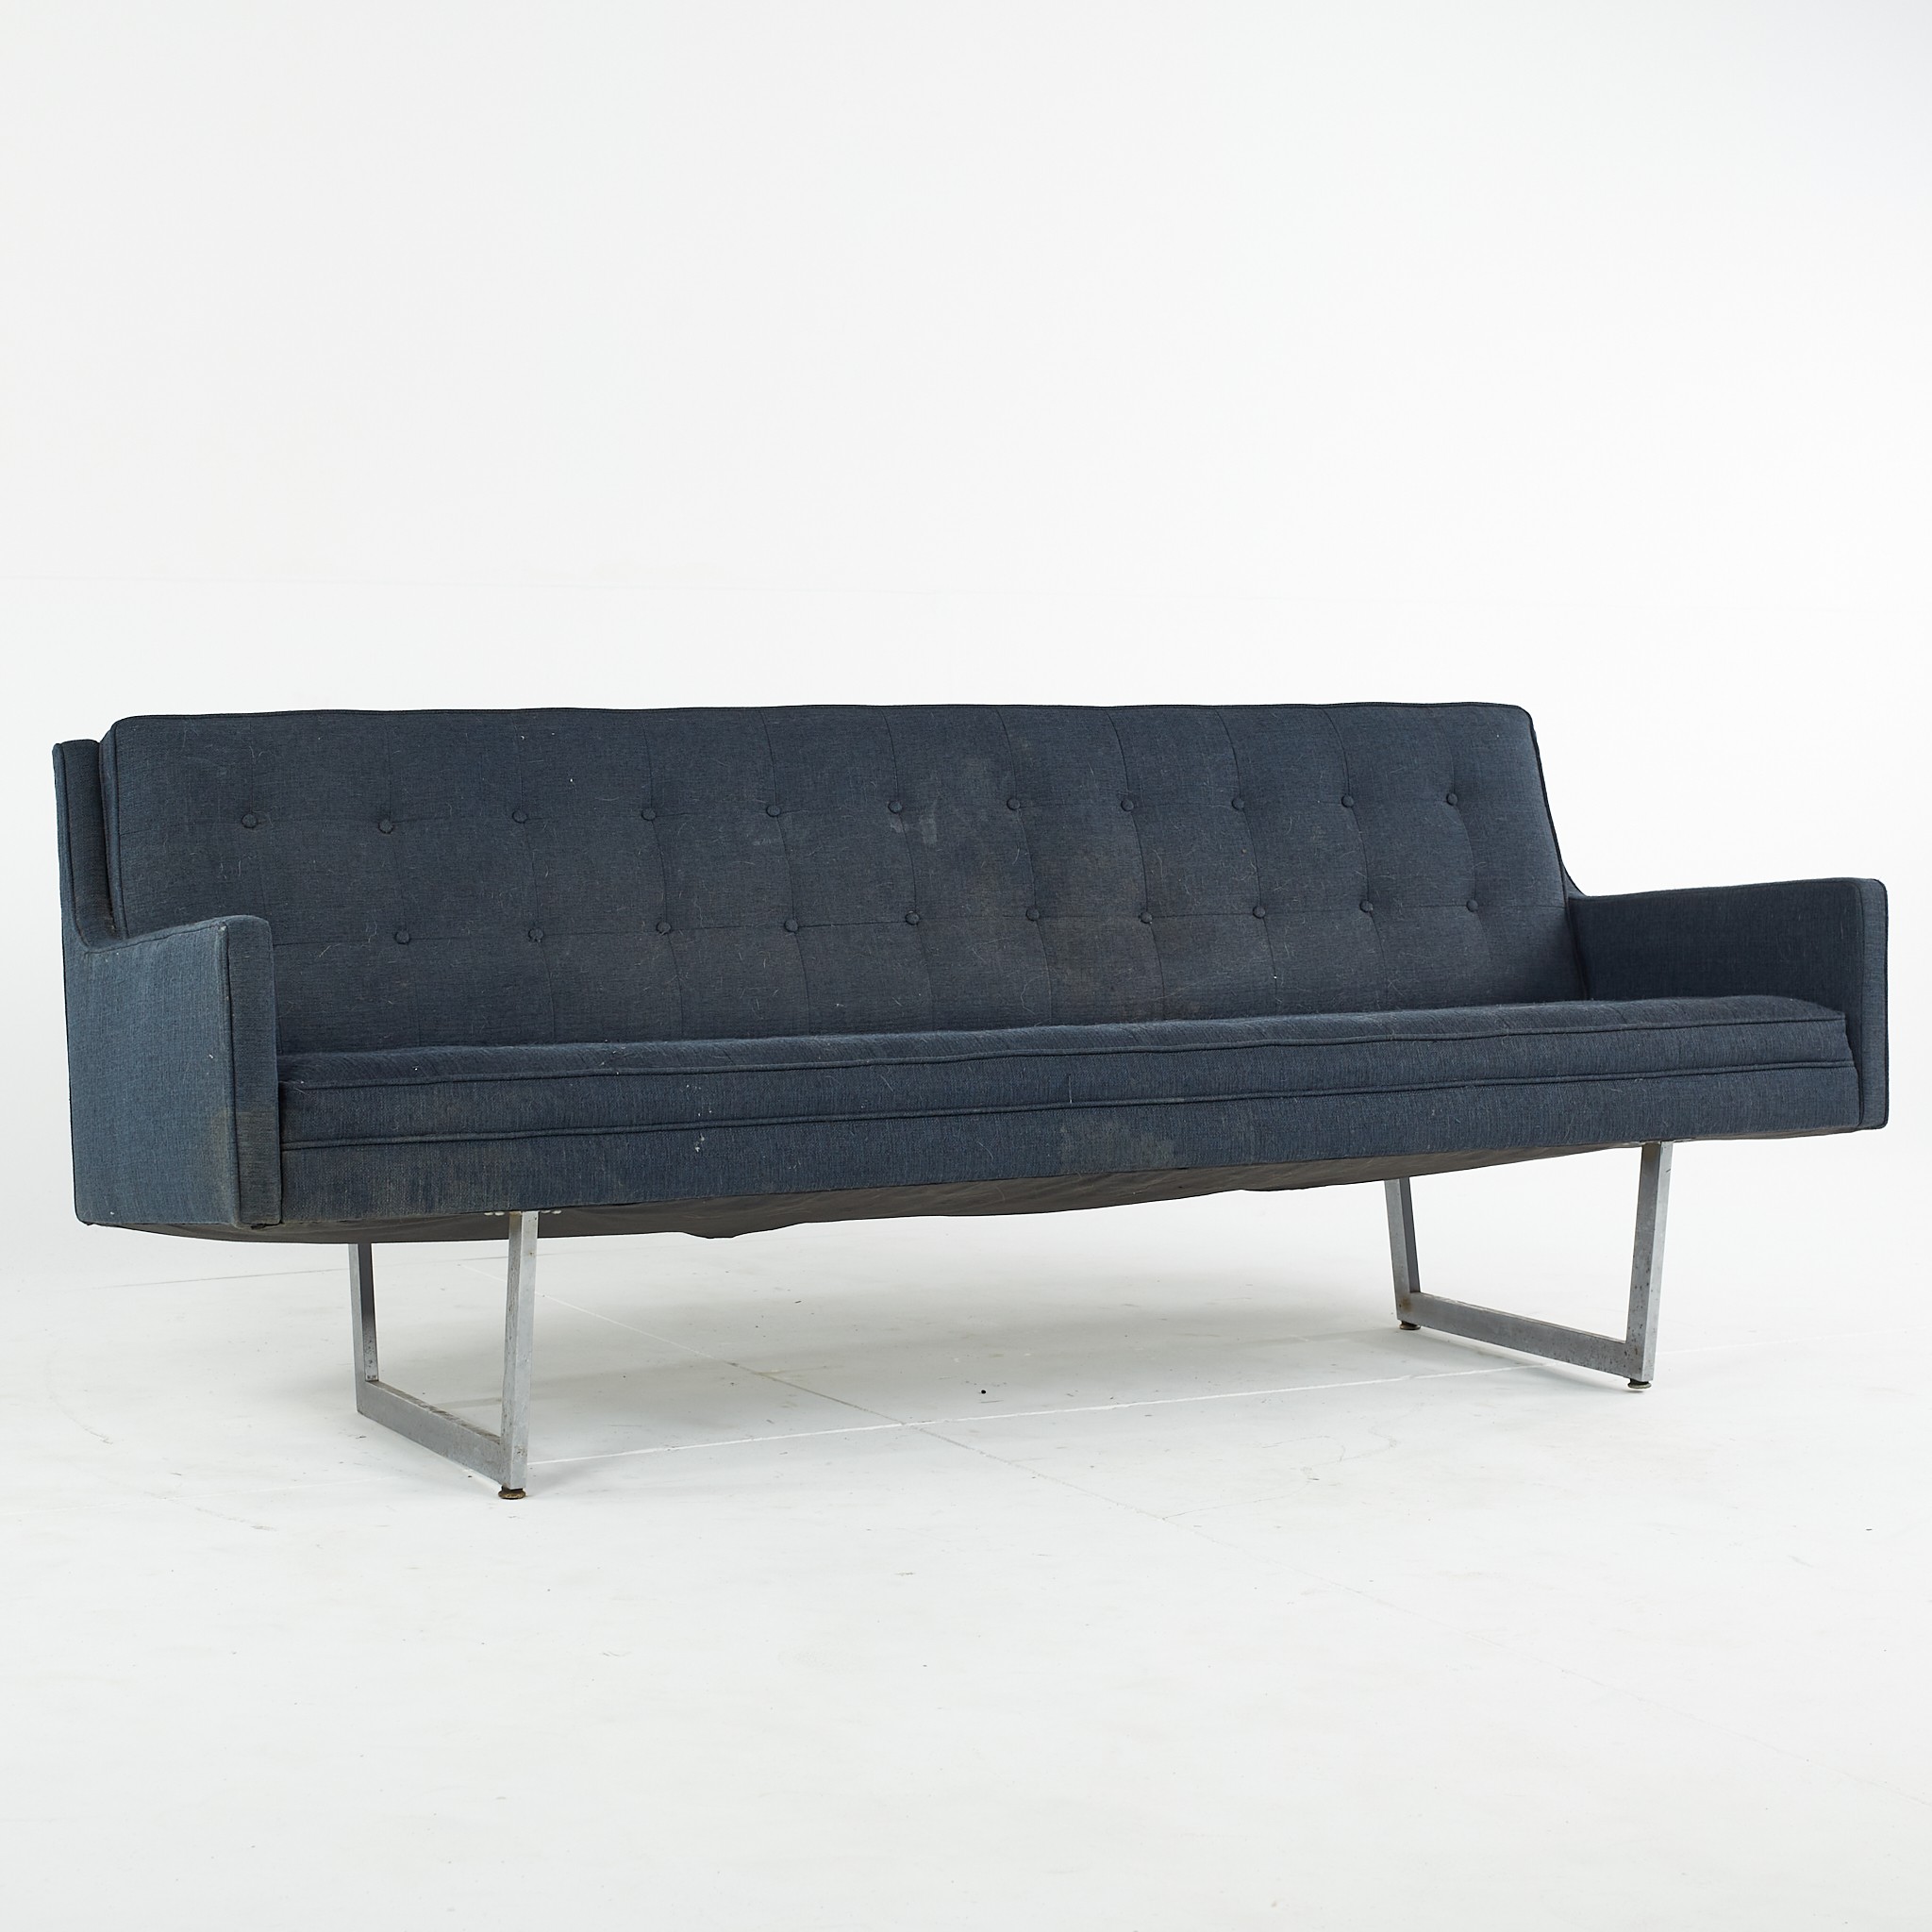 Patrician Furniture Company Mid Century Chrome Sleigh Leg Tufted Sofa